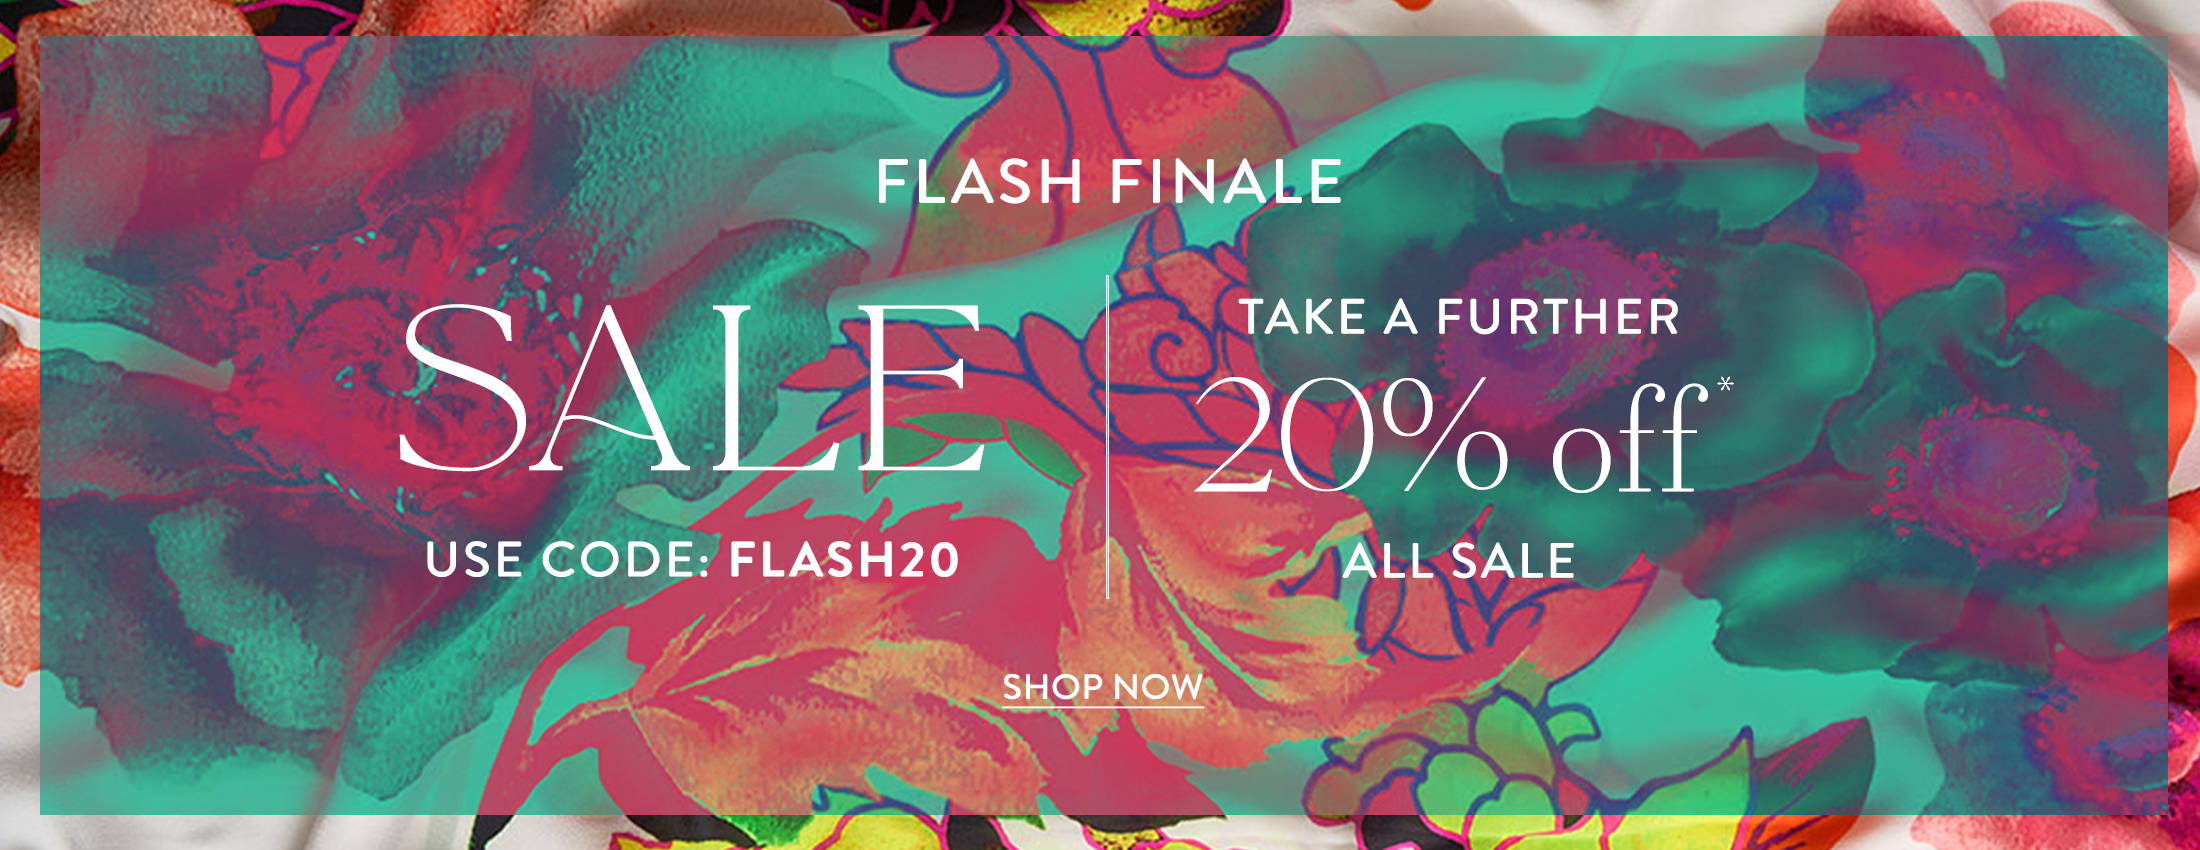 CAMILLA SALE | flash finale | take a further 20% off all sale | use code: FLASH20 